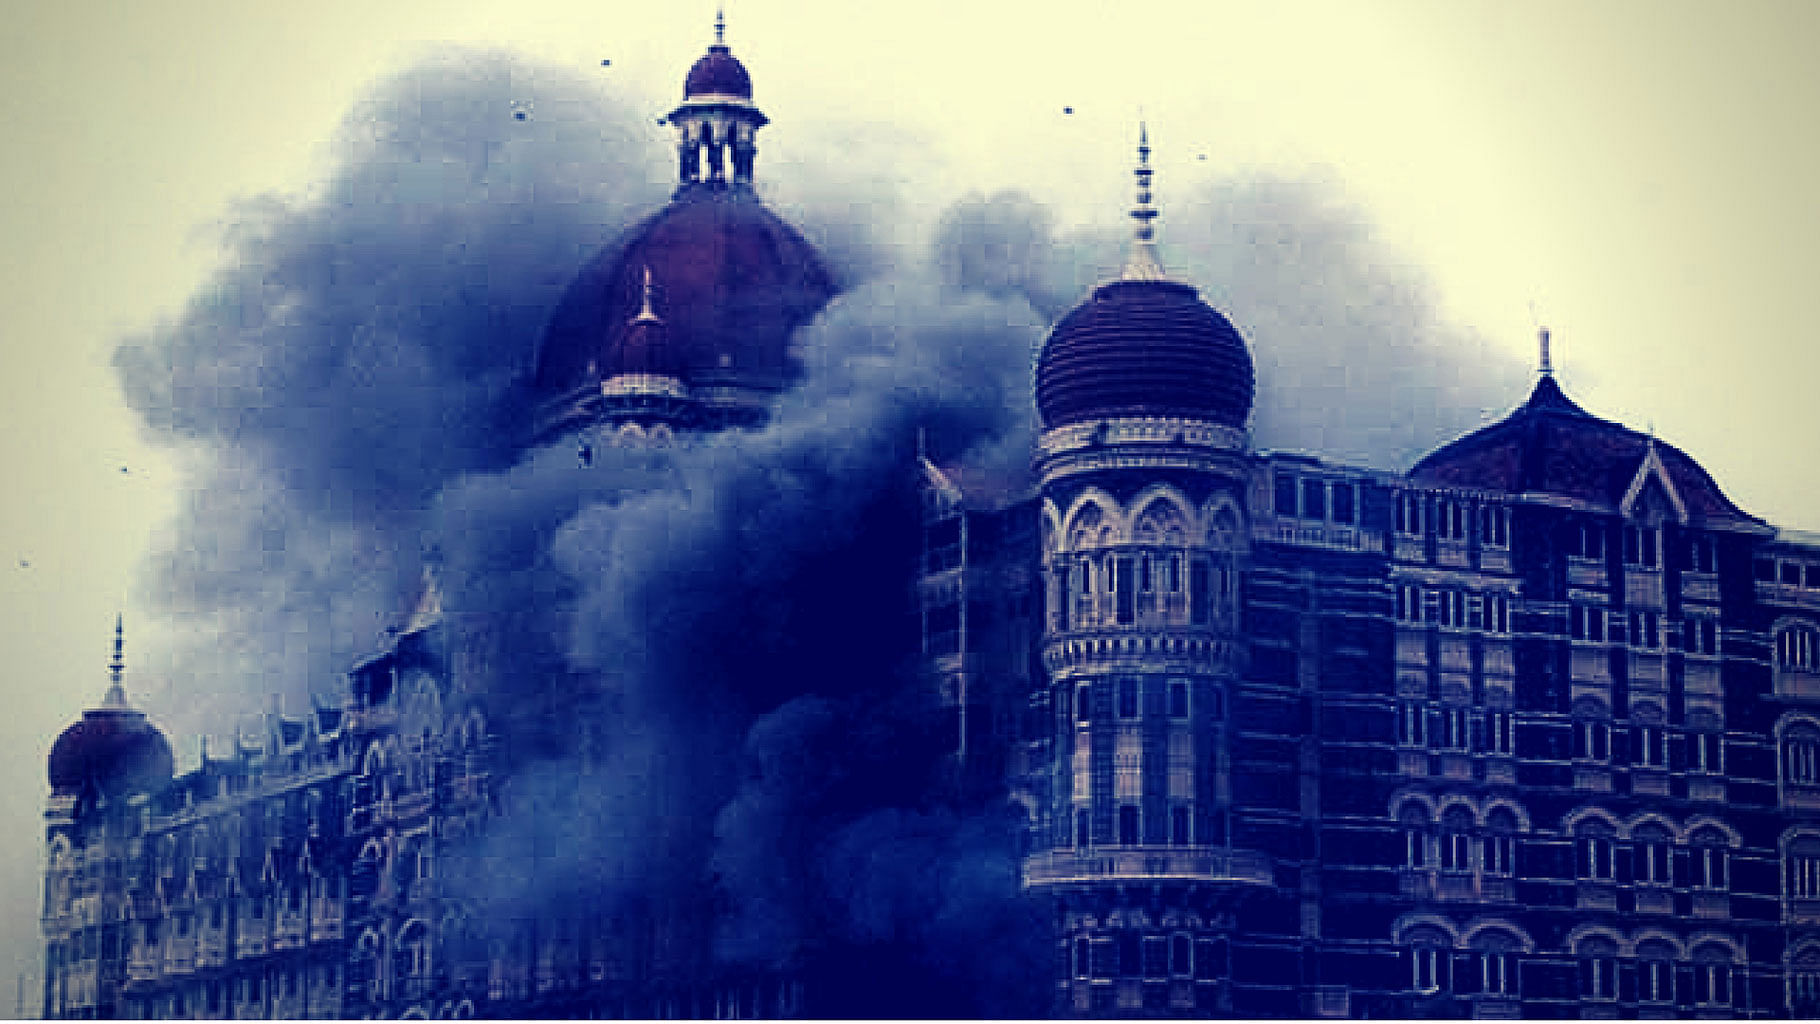 The Taj Hotel in Mumbai 26/11 attack. (Photo: PTI)